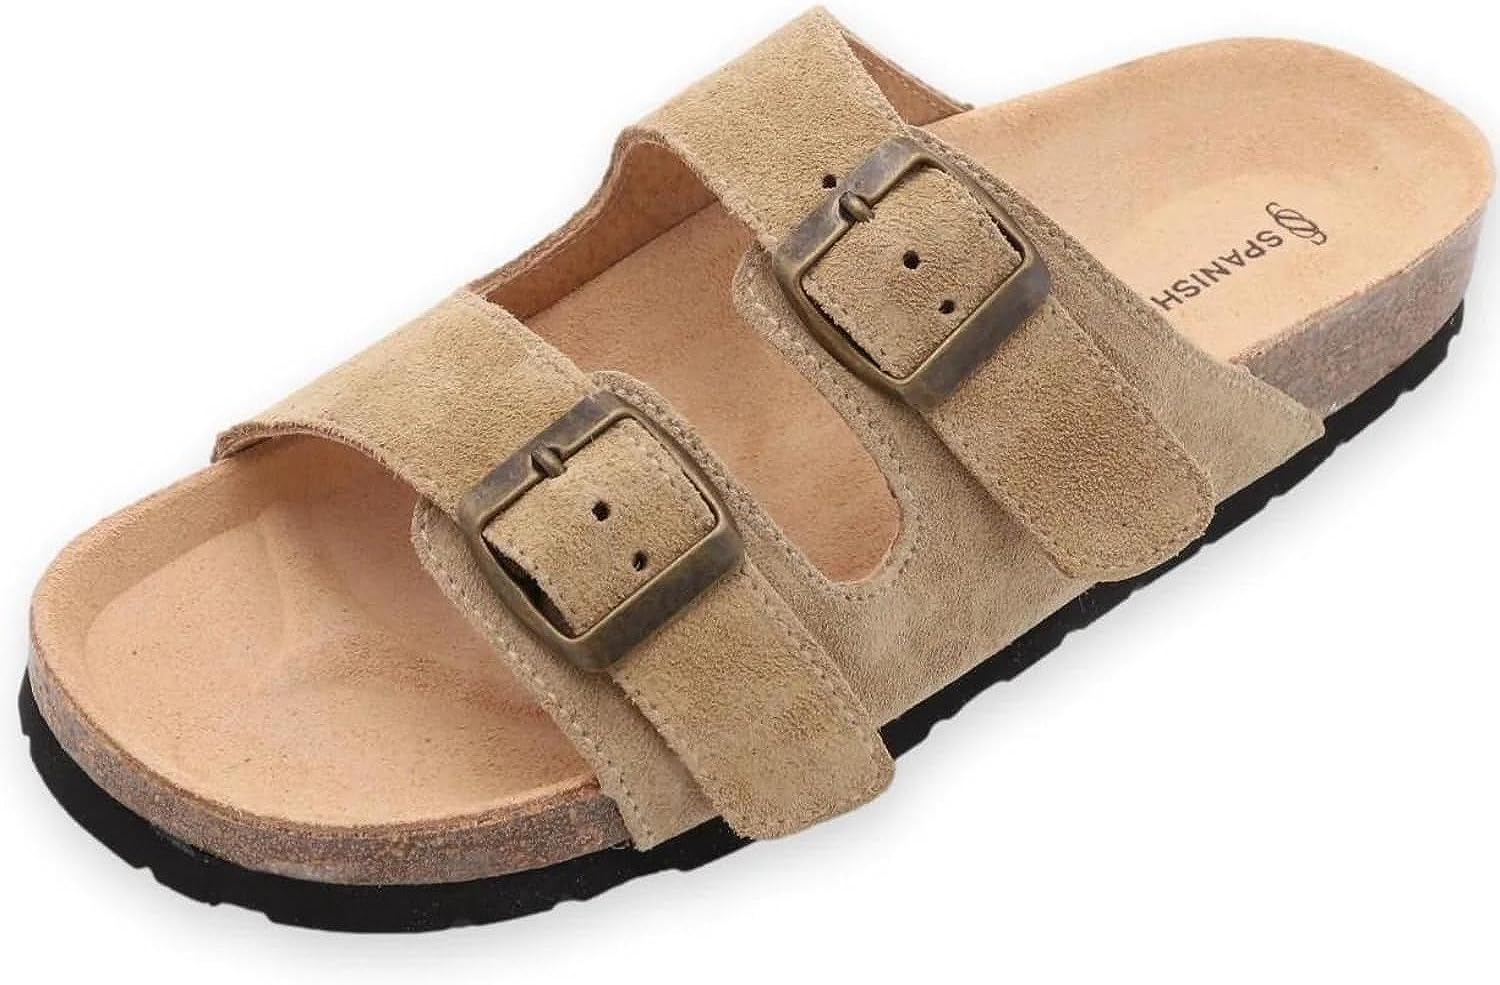 basketball Nebu aldrig The Spanish Sandal co Soft Suede Leather Flat Sandals - Cork Footbed Sandal  with | eBay